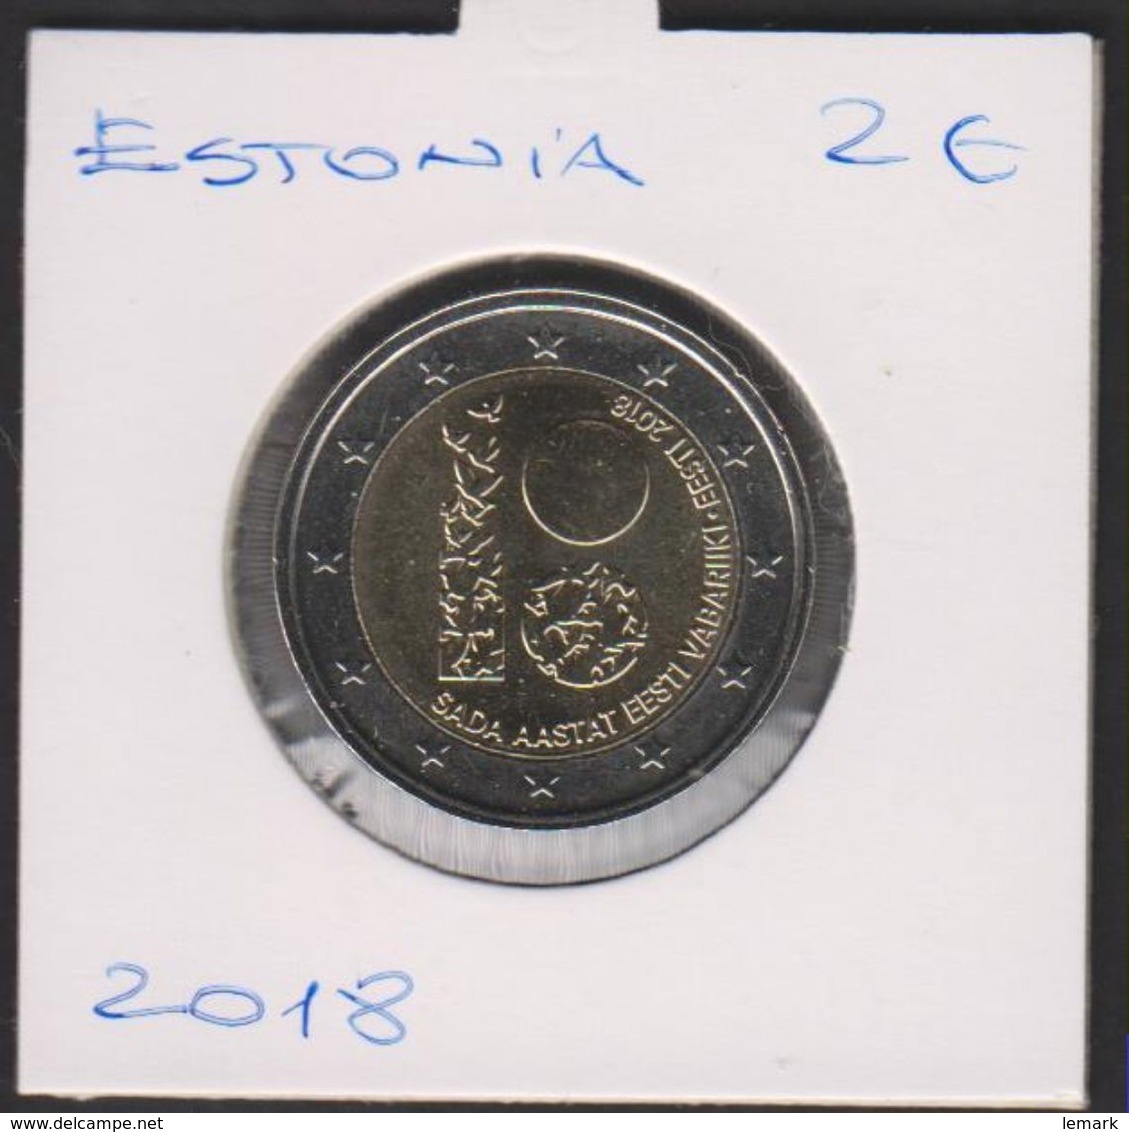 ESTONIA - 2 € Euro Commemorative Coin 2018 - Republic Of Estonia 100 UNC - Estonia